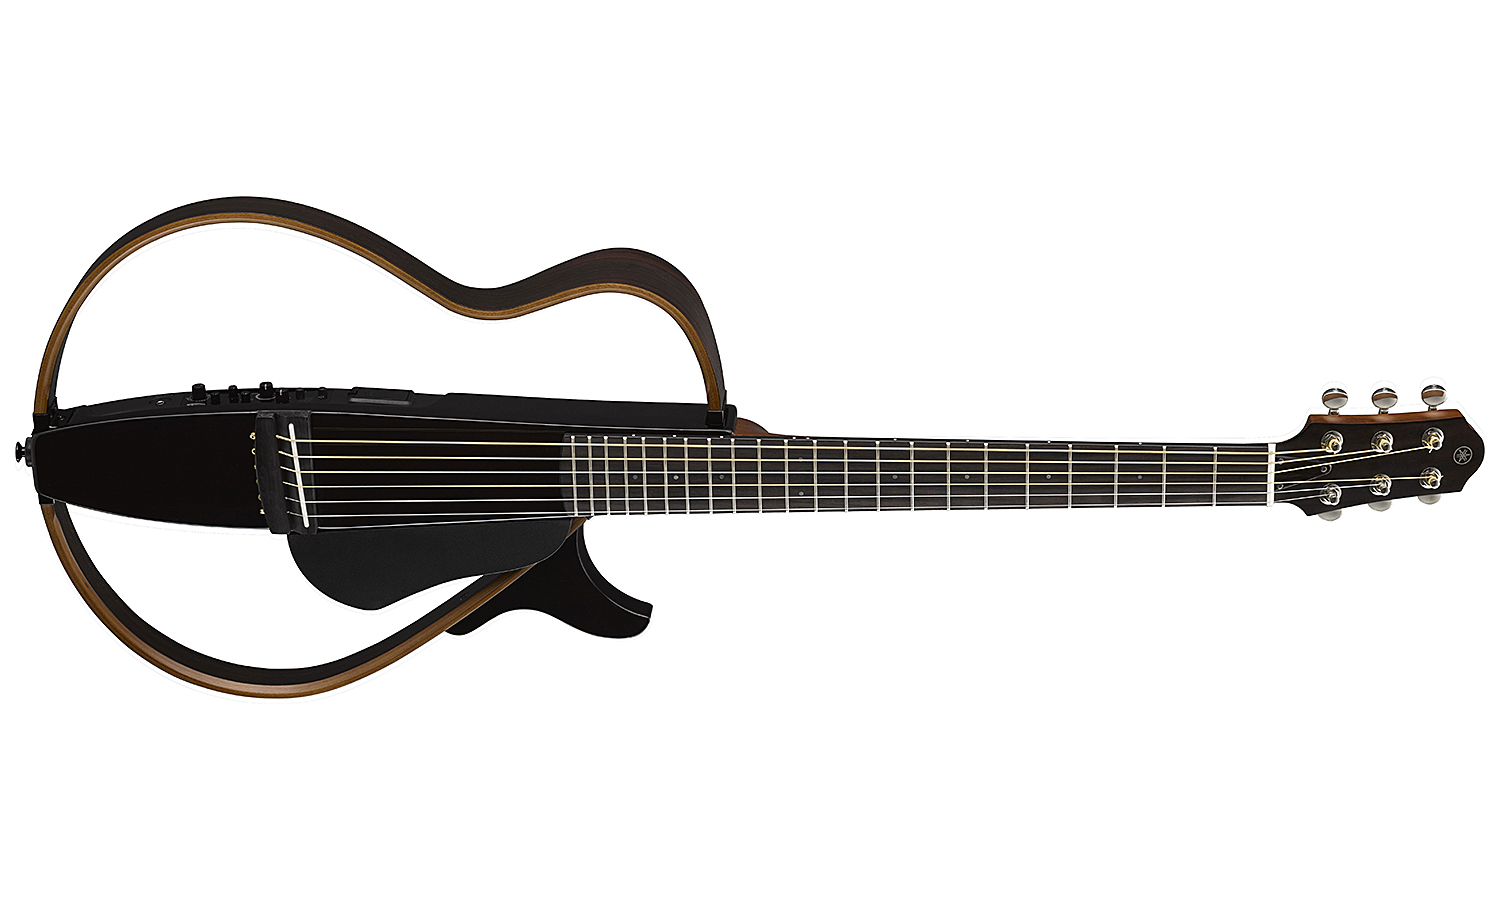 Yamaha Silent Guitar Slg200s - Translucent Black - Electro acoustic guitar - Variation 1